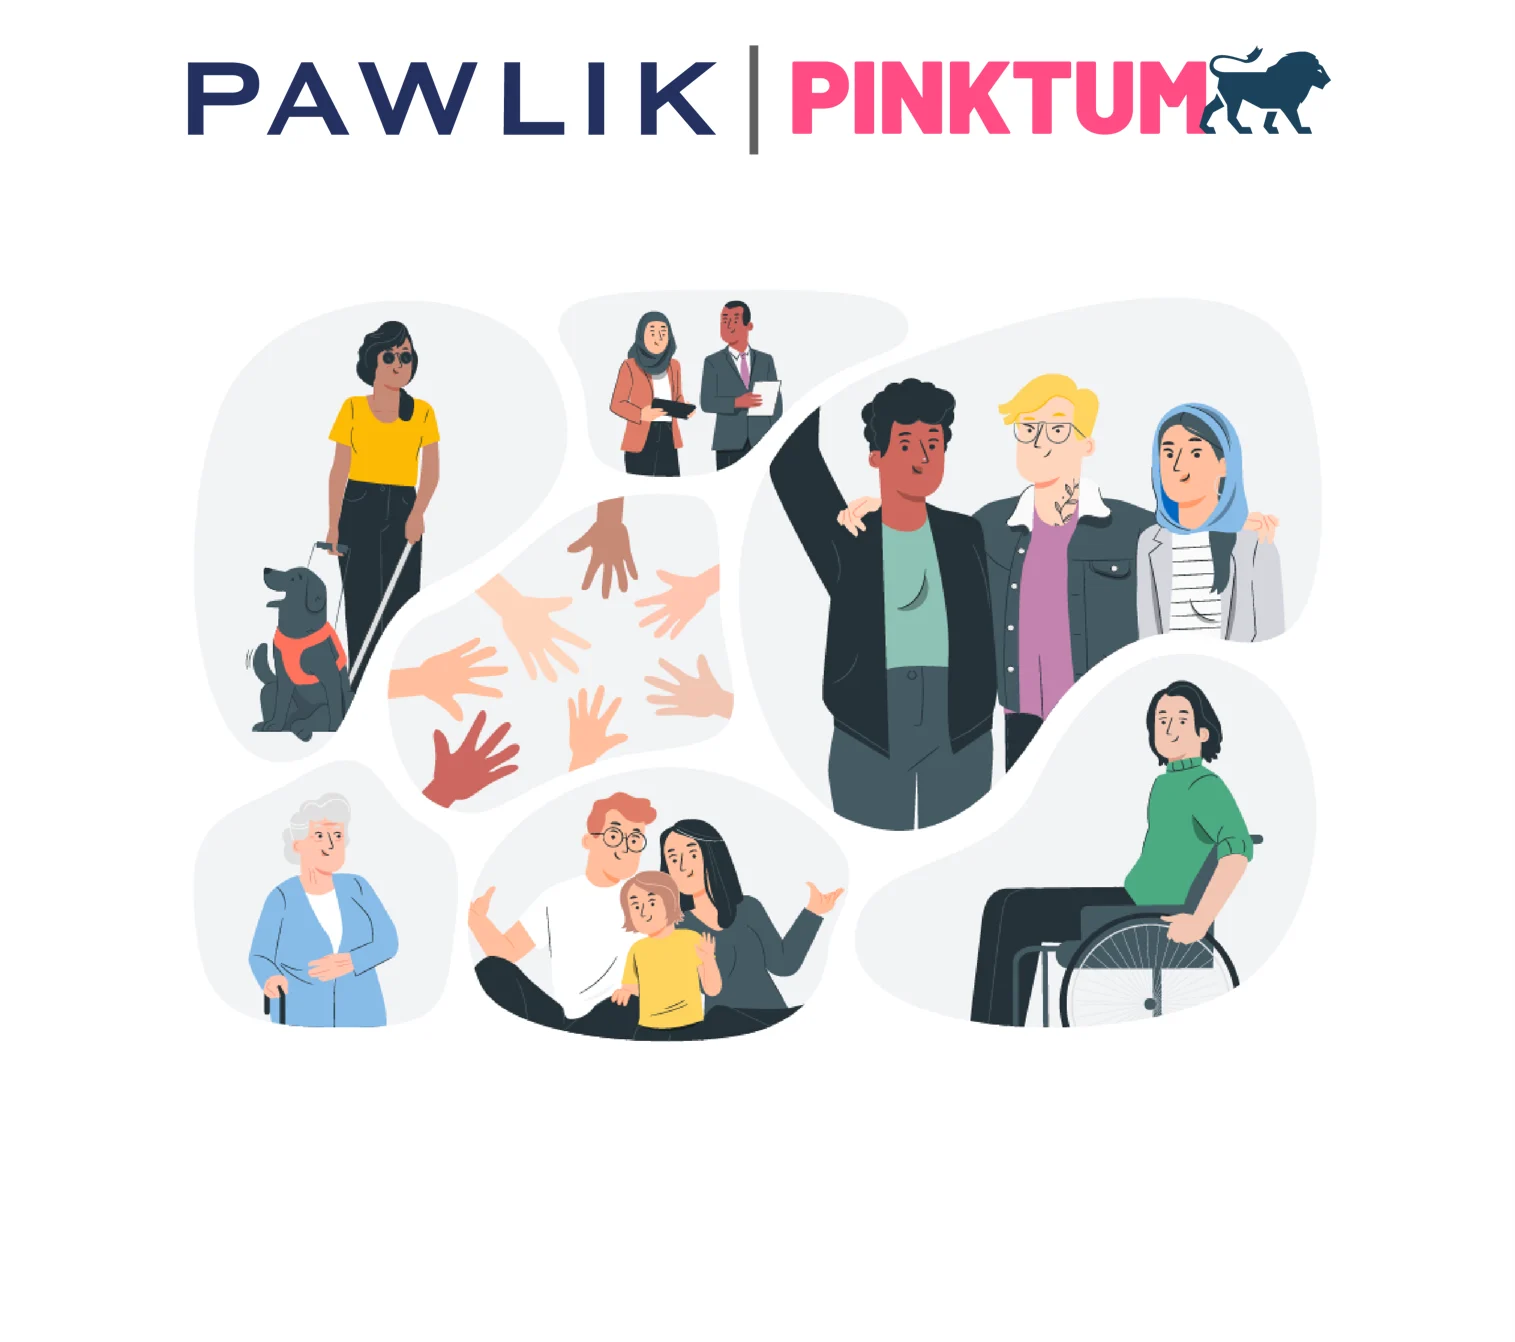 PINKTUM celebrates the diversity day